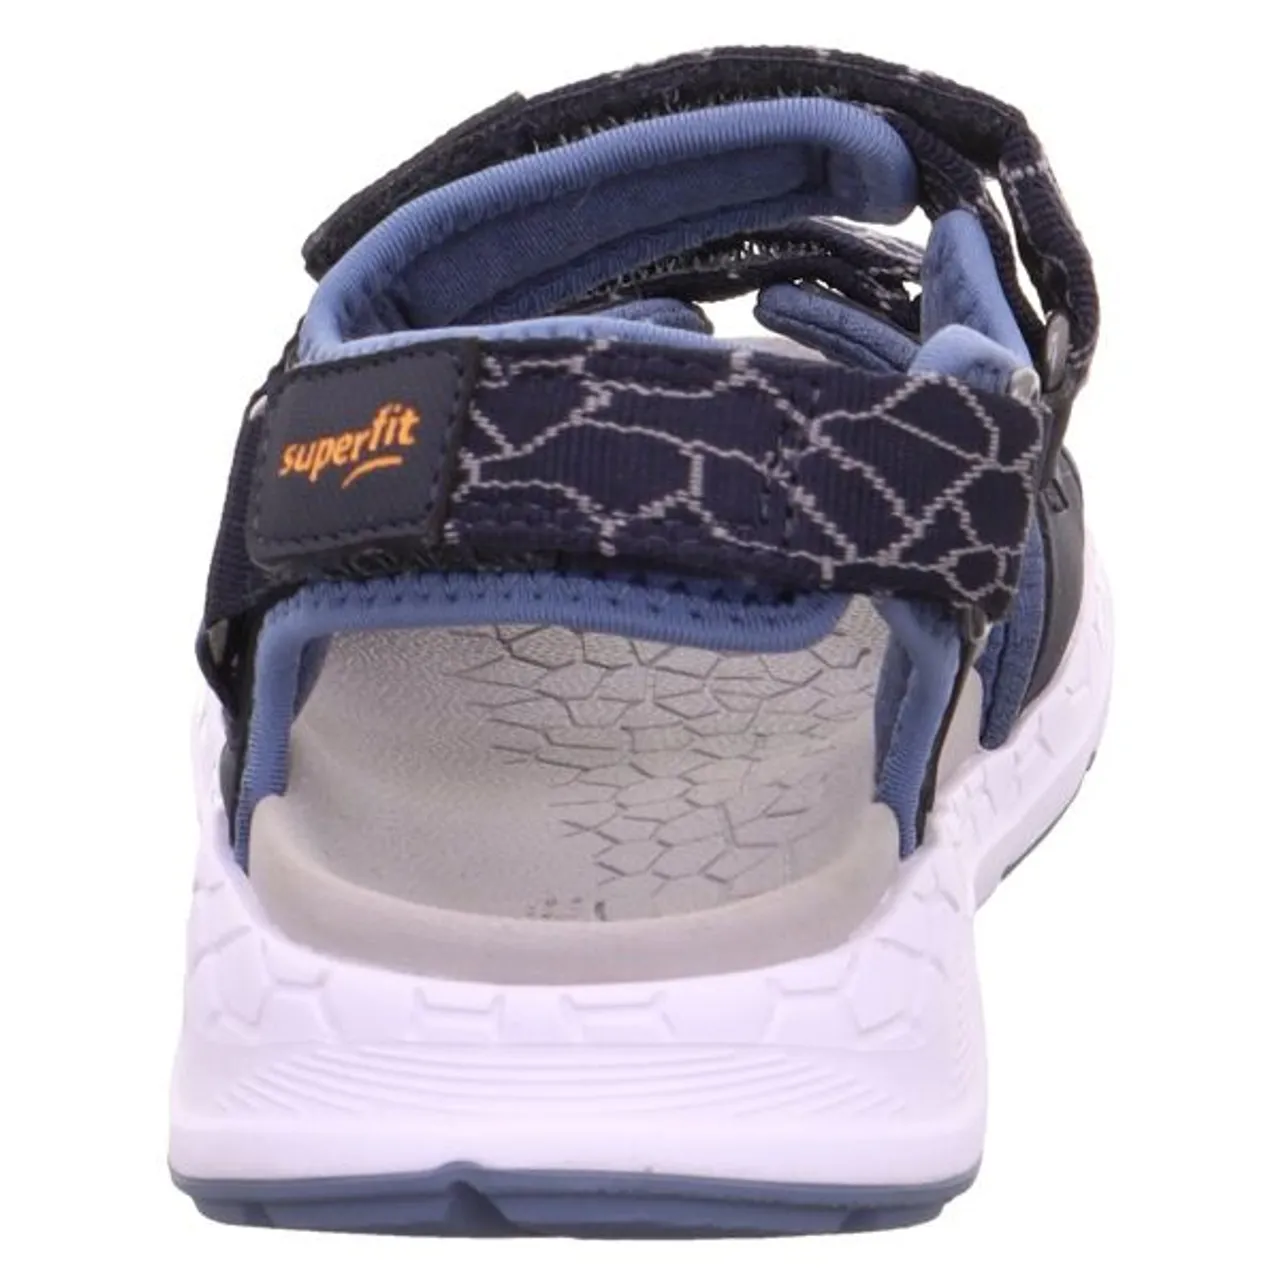 Sandale SUPERFIT "CRISS CROSS WMS: Mittel" Gr. 33, blau (blau, orange) Kinder Schuhe